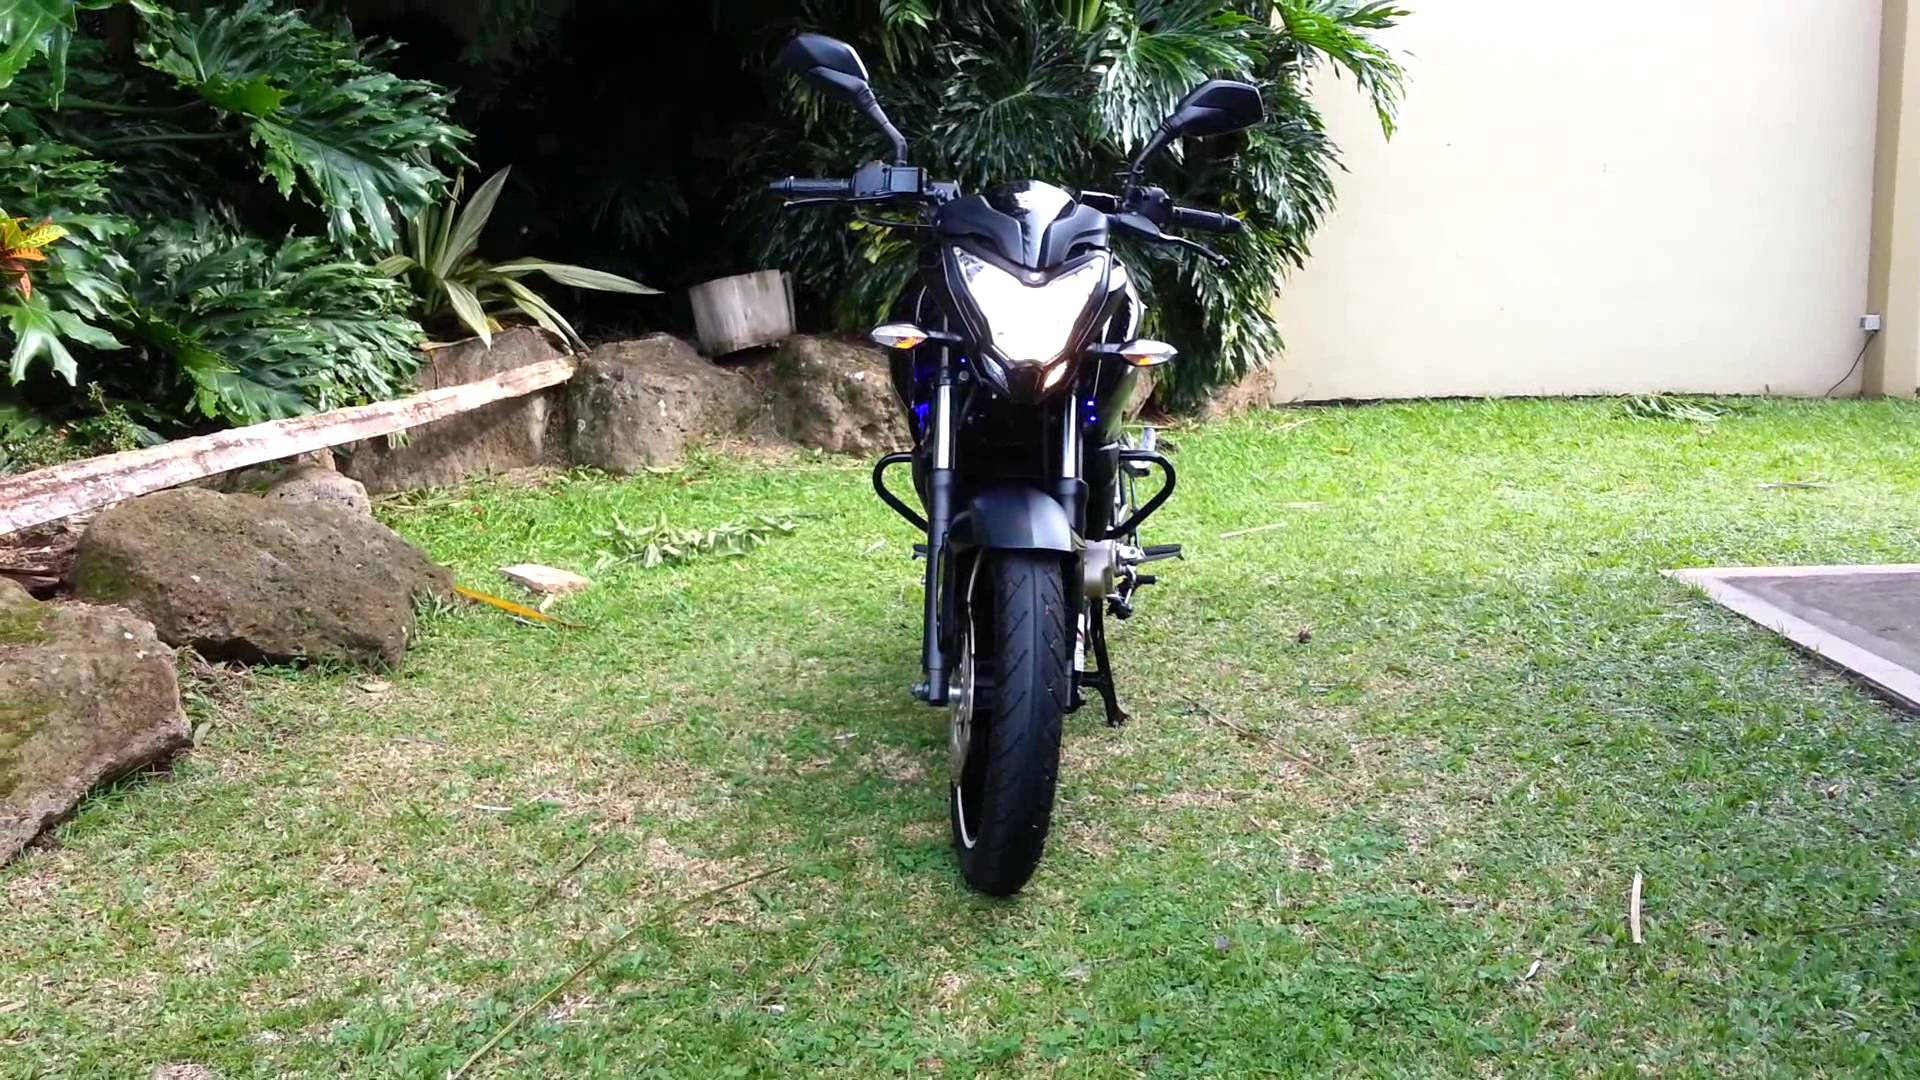 Ns 200 Motorcycle In Garden Background